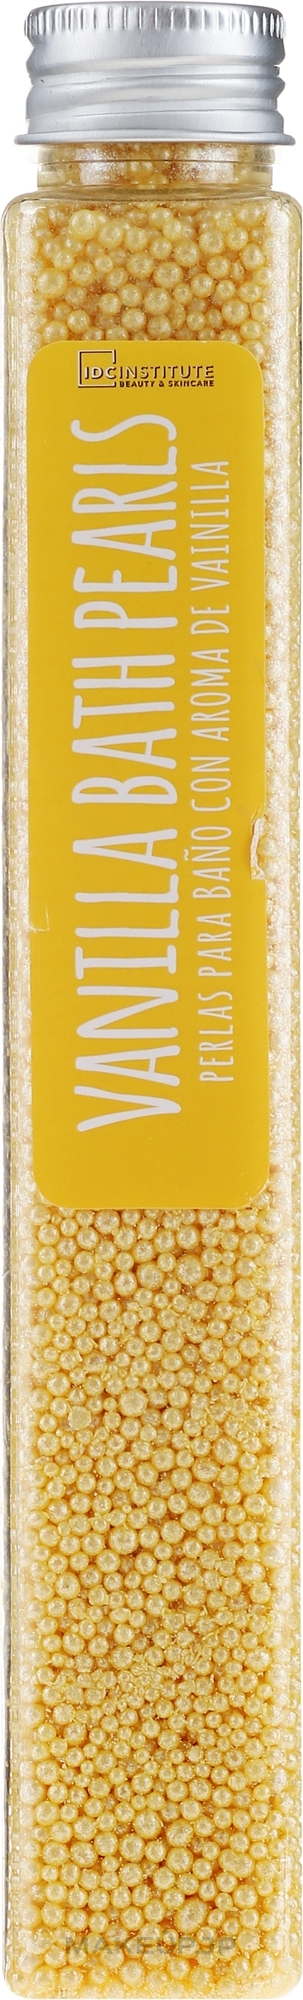 Bath Pearls "Vanilla" - IDC Institute Bath Pearls Vanilla — photo 90 g